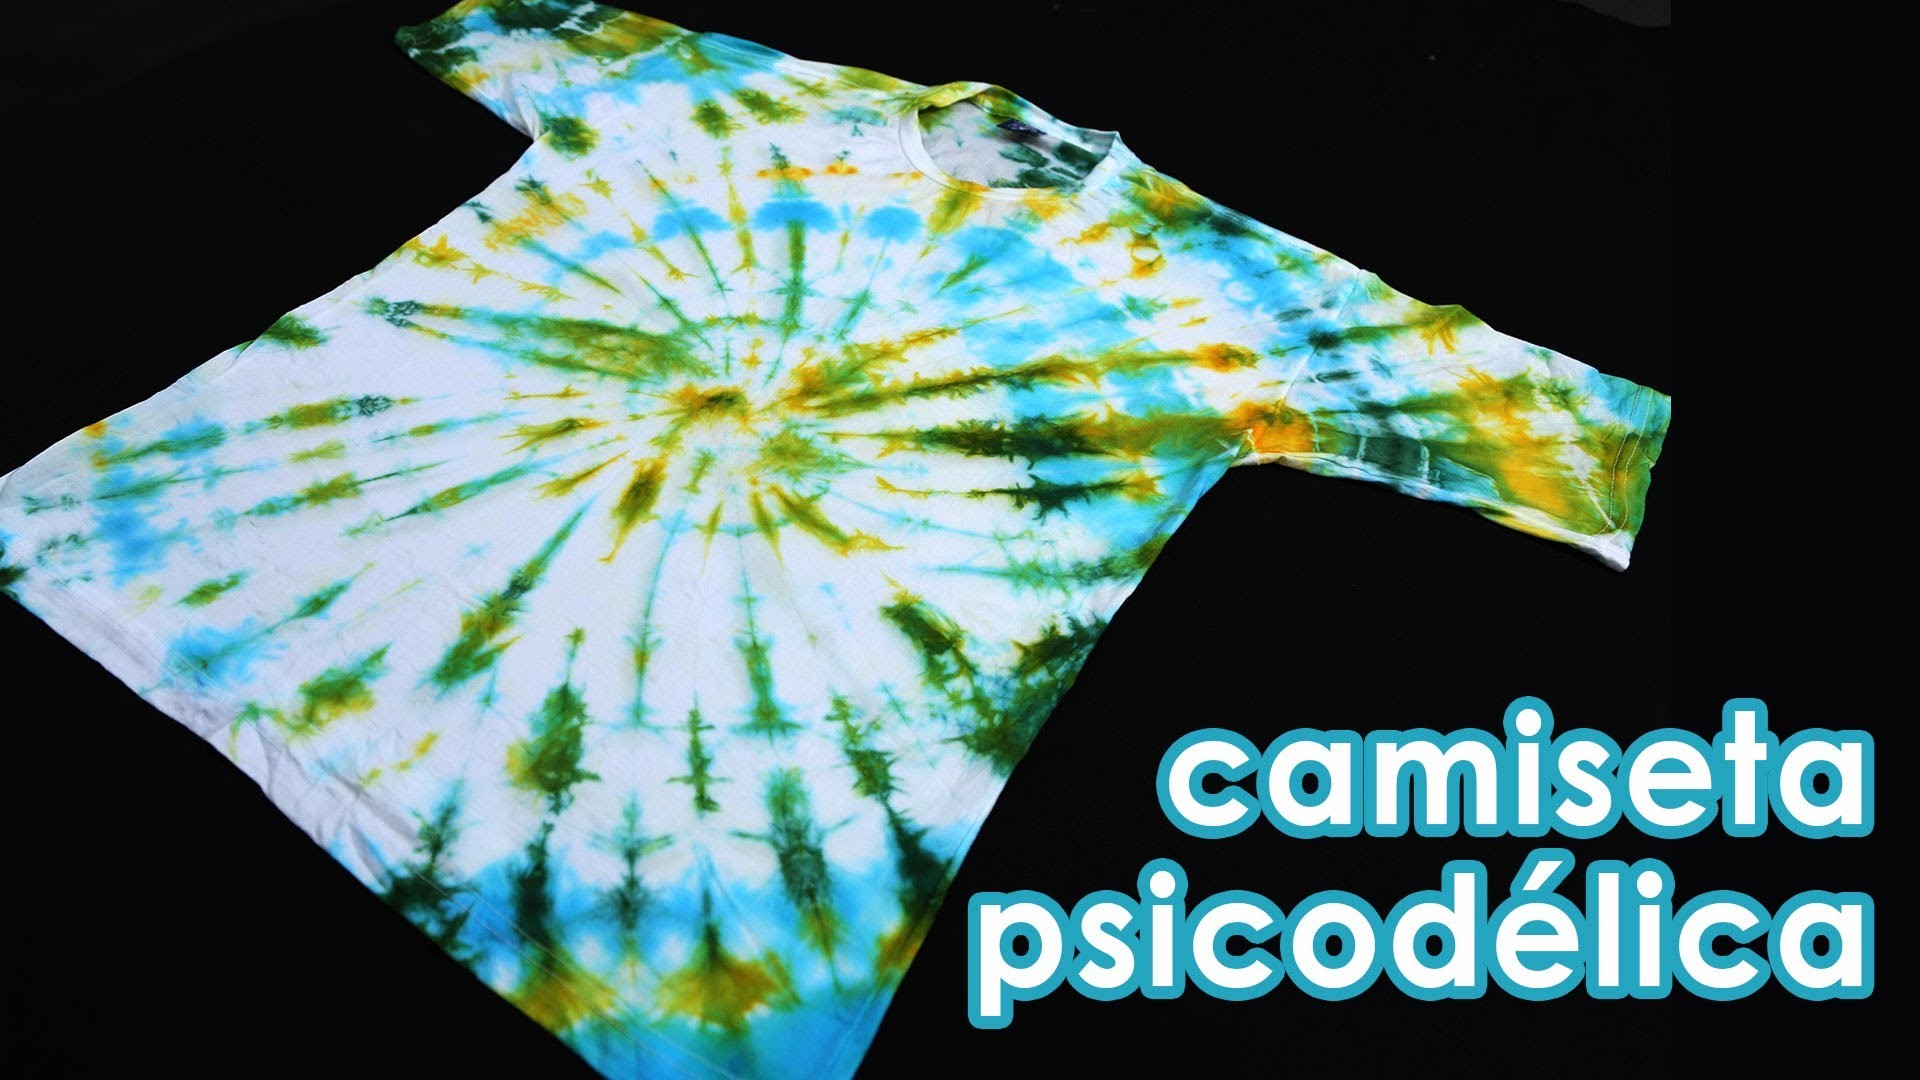 Camiseta psicodélica (como fazer tie-dye) (artesanato)